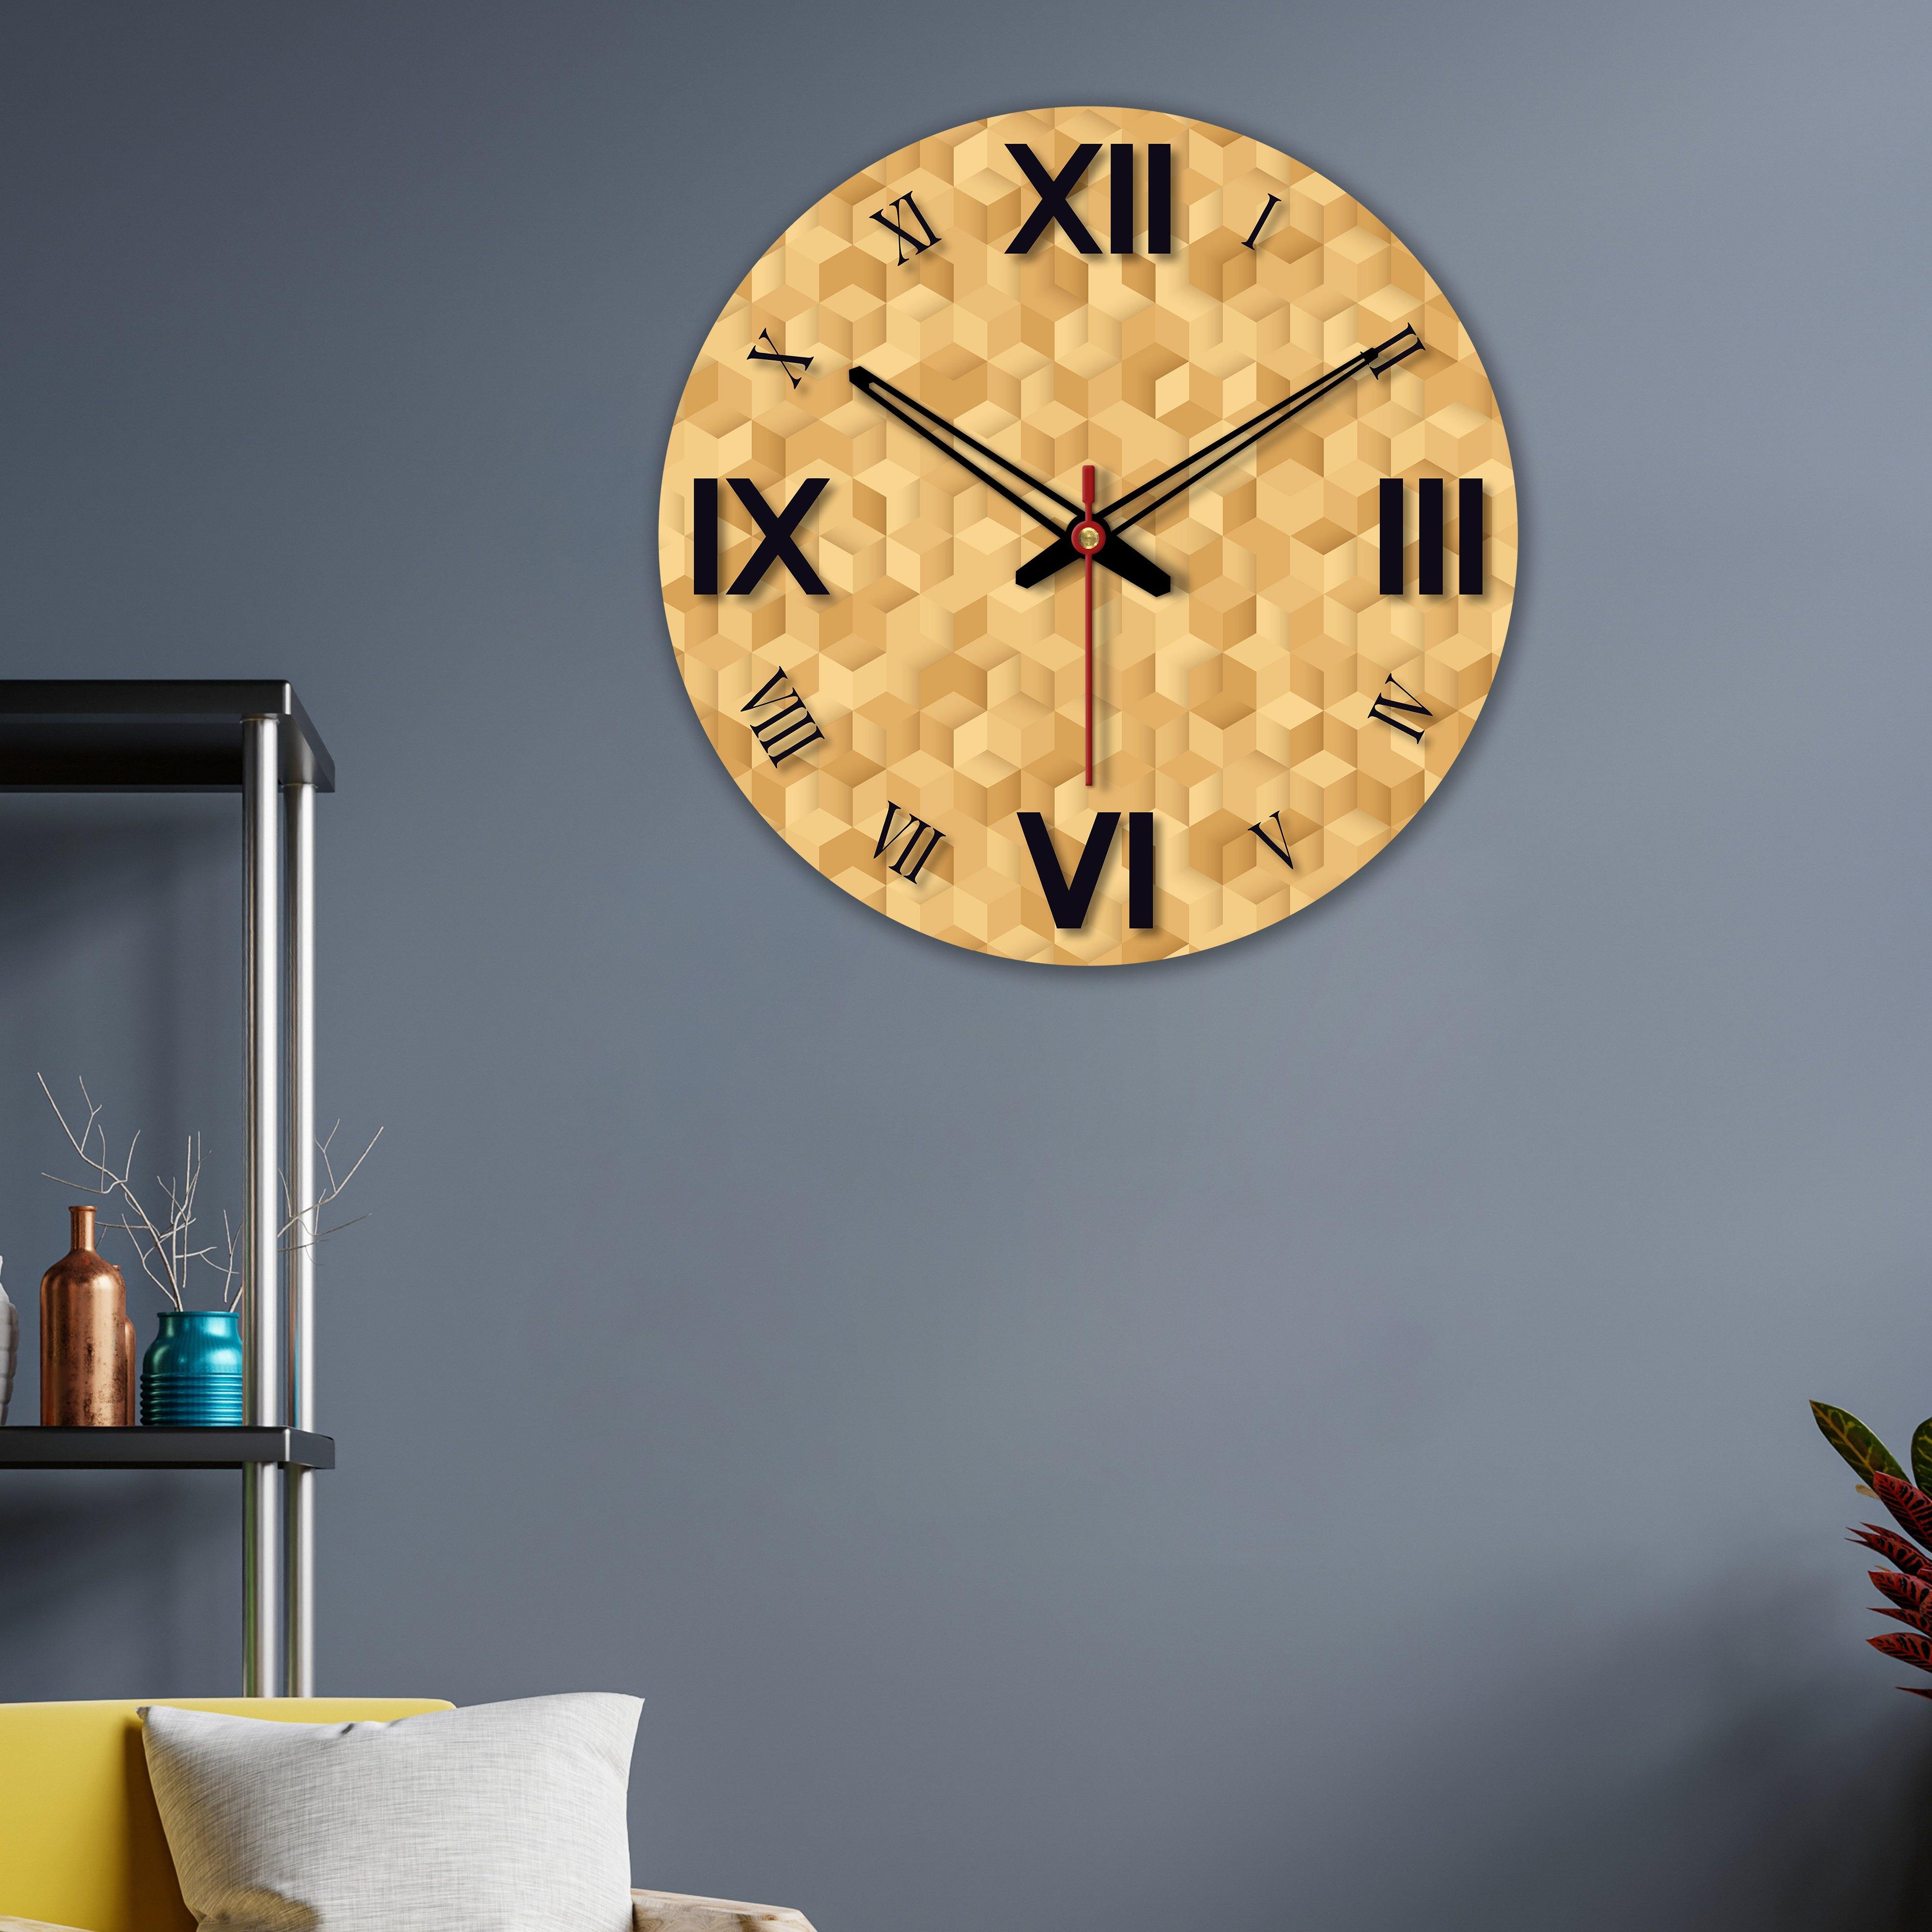 Three D Cubes Printed Wooden Wall Clock